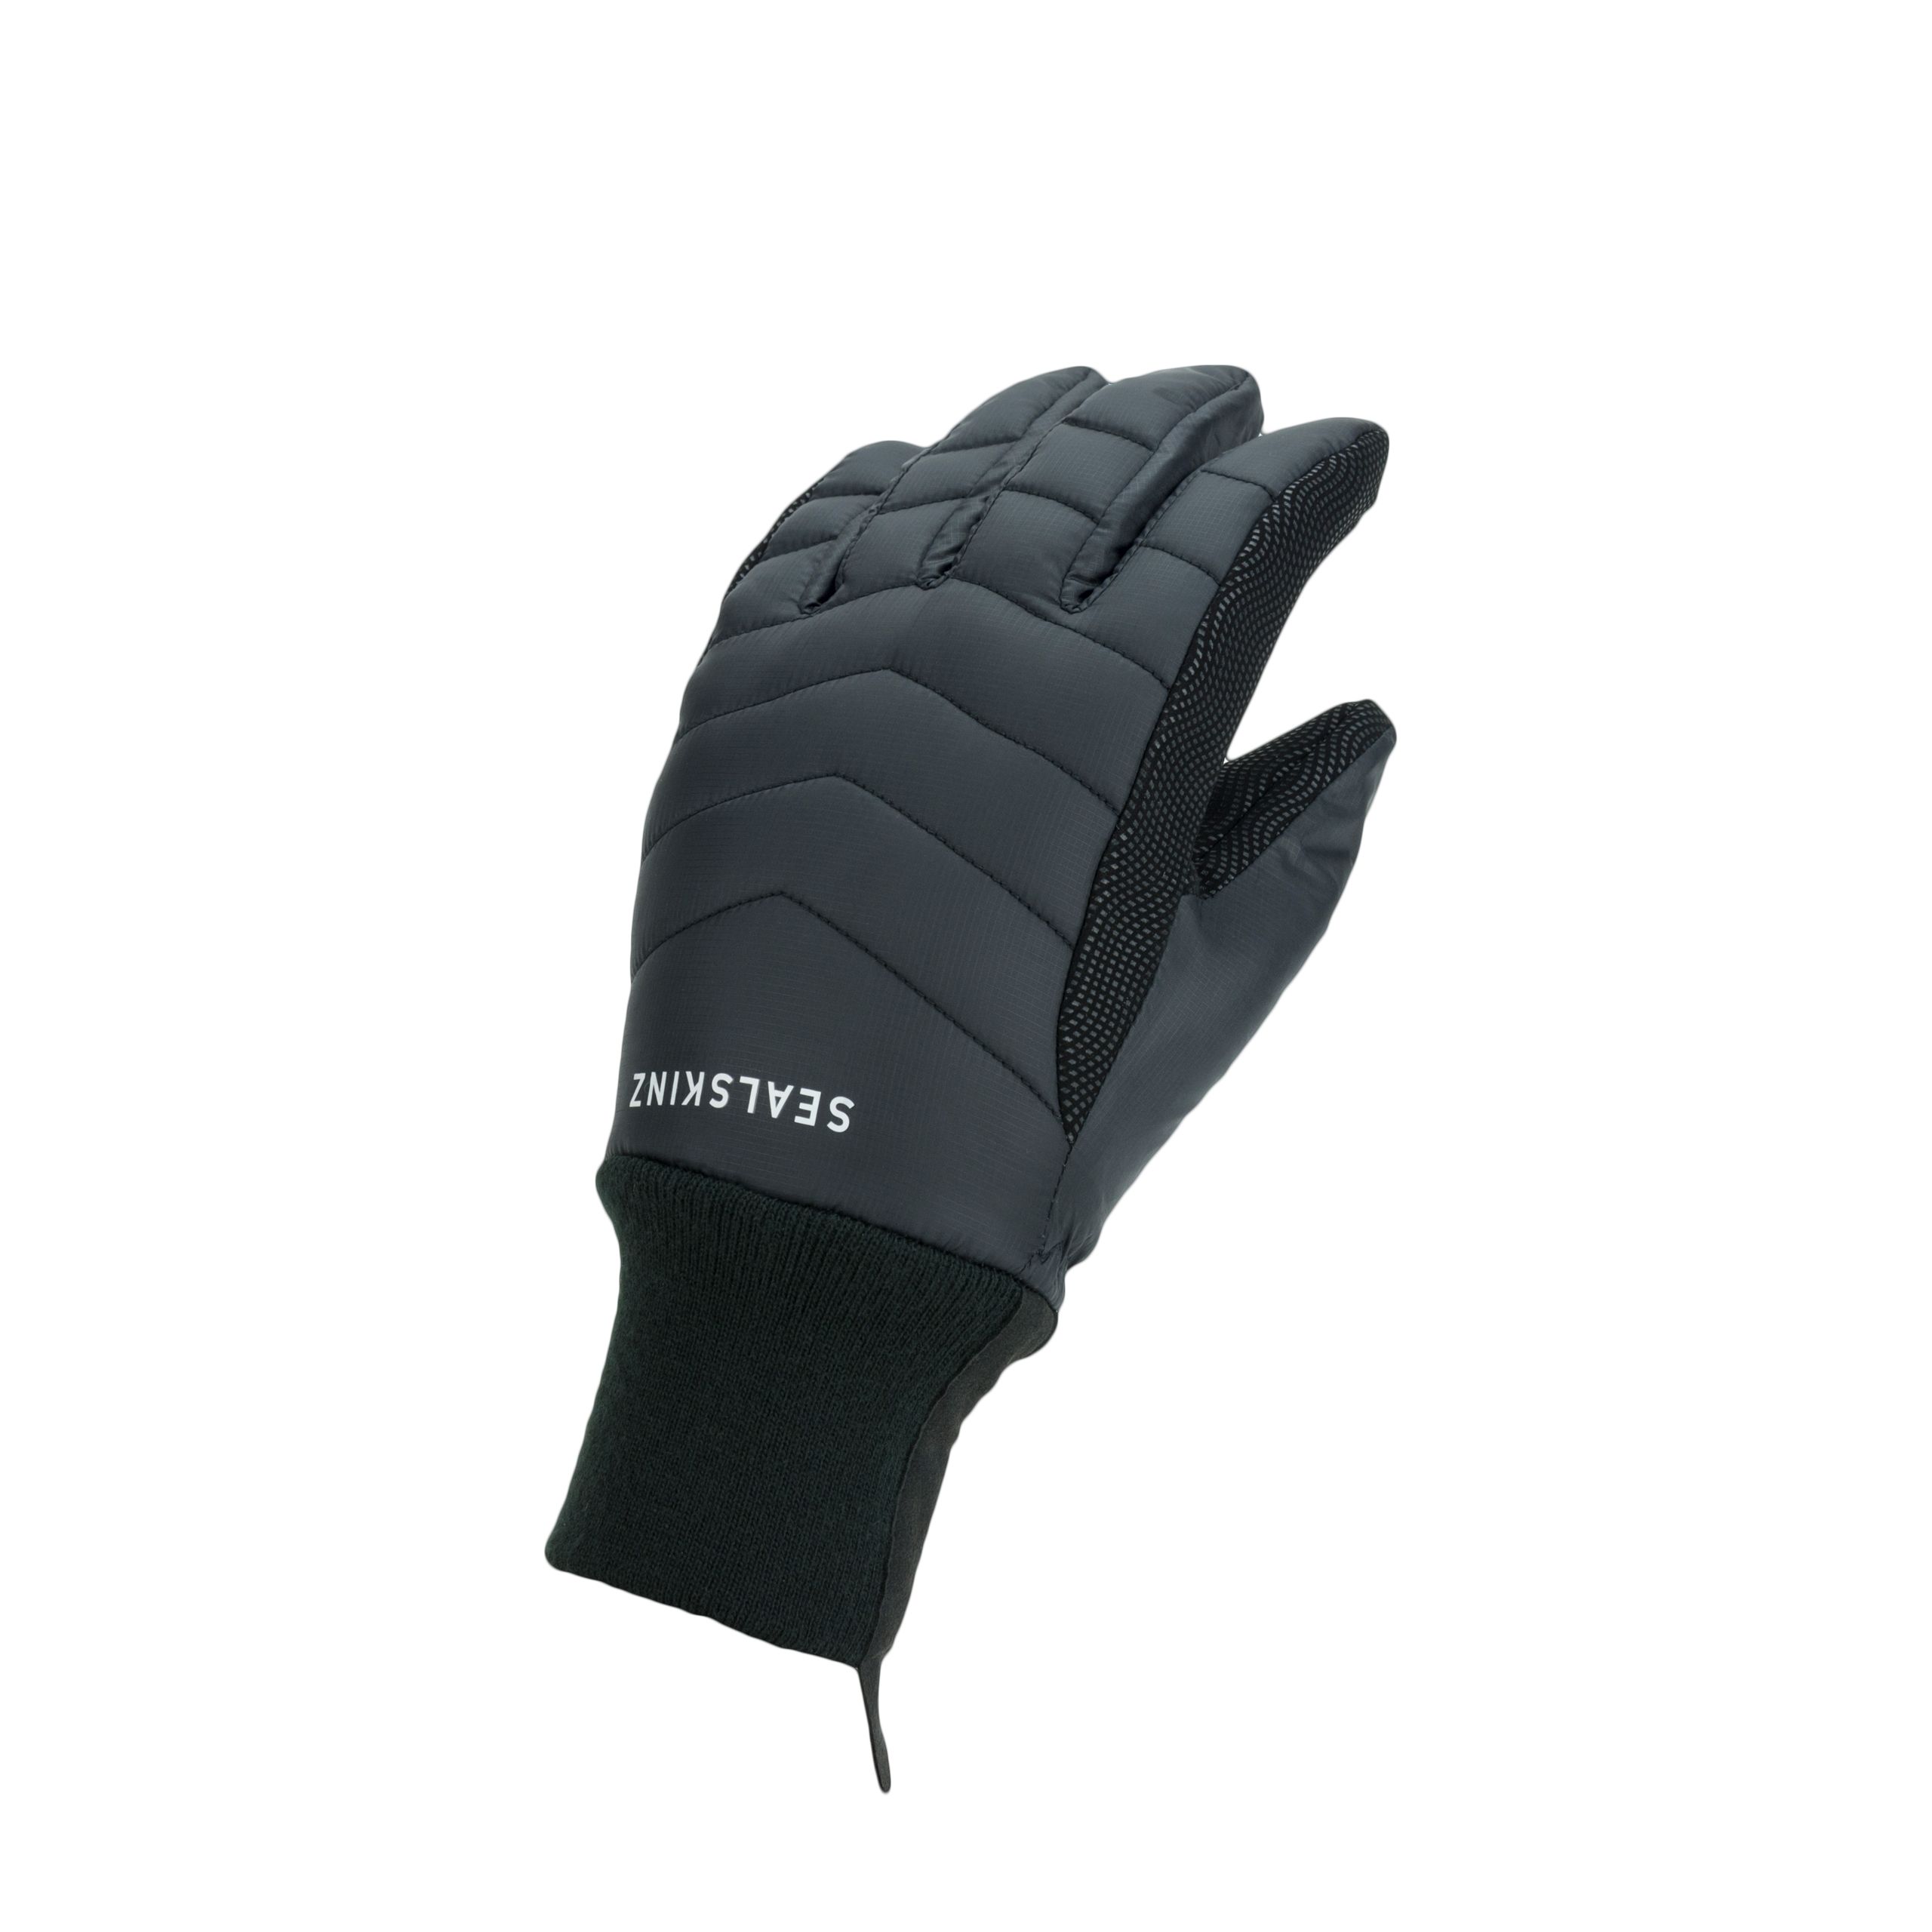 Sealskinz Waterproof All Weather Lightweight Insulated Glove